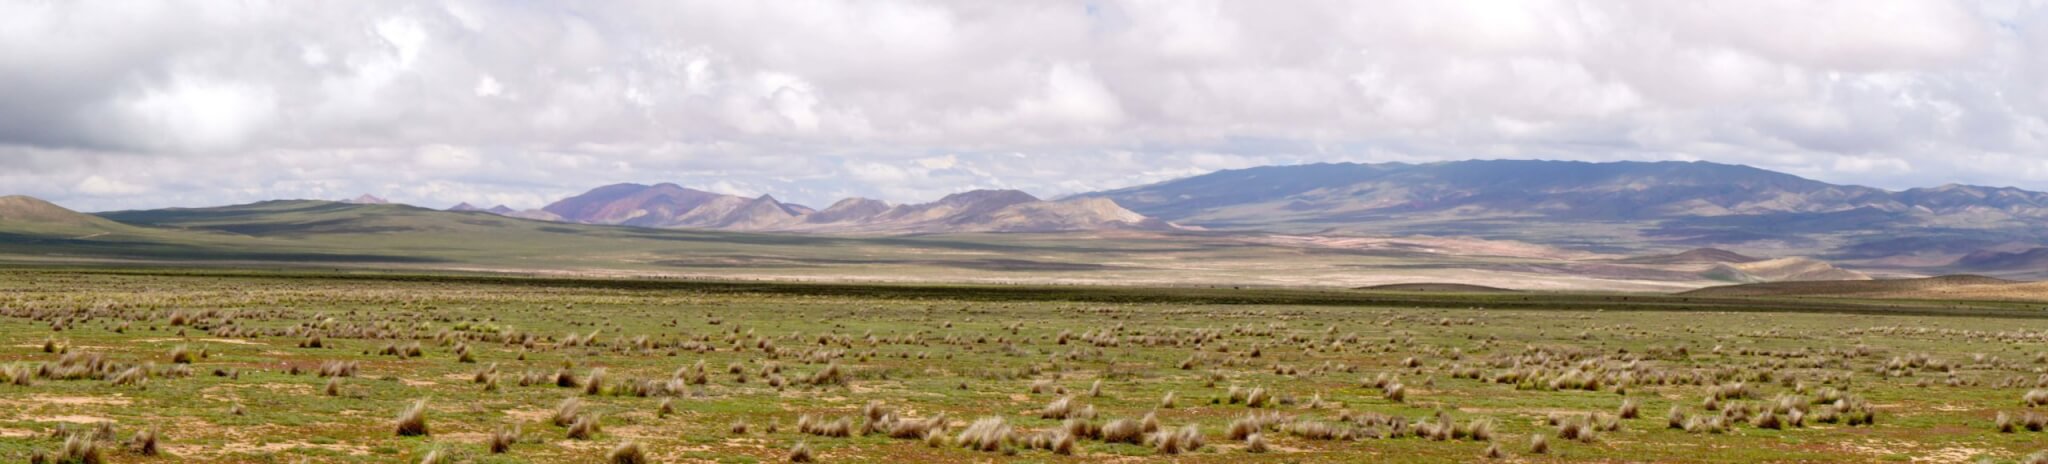 Views of the Altiplano Salta Argentina